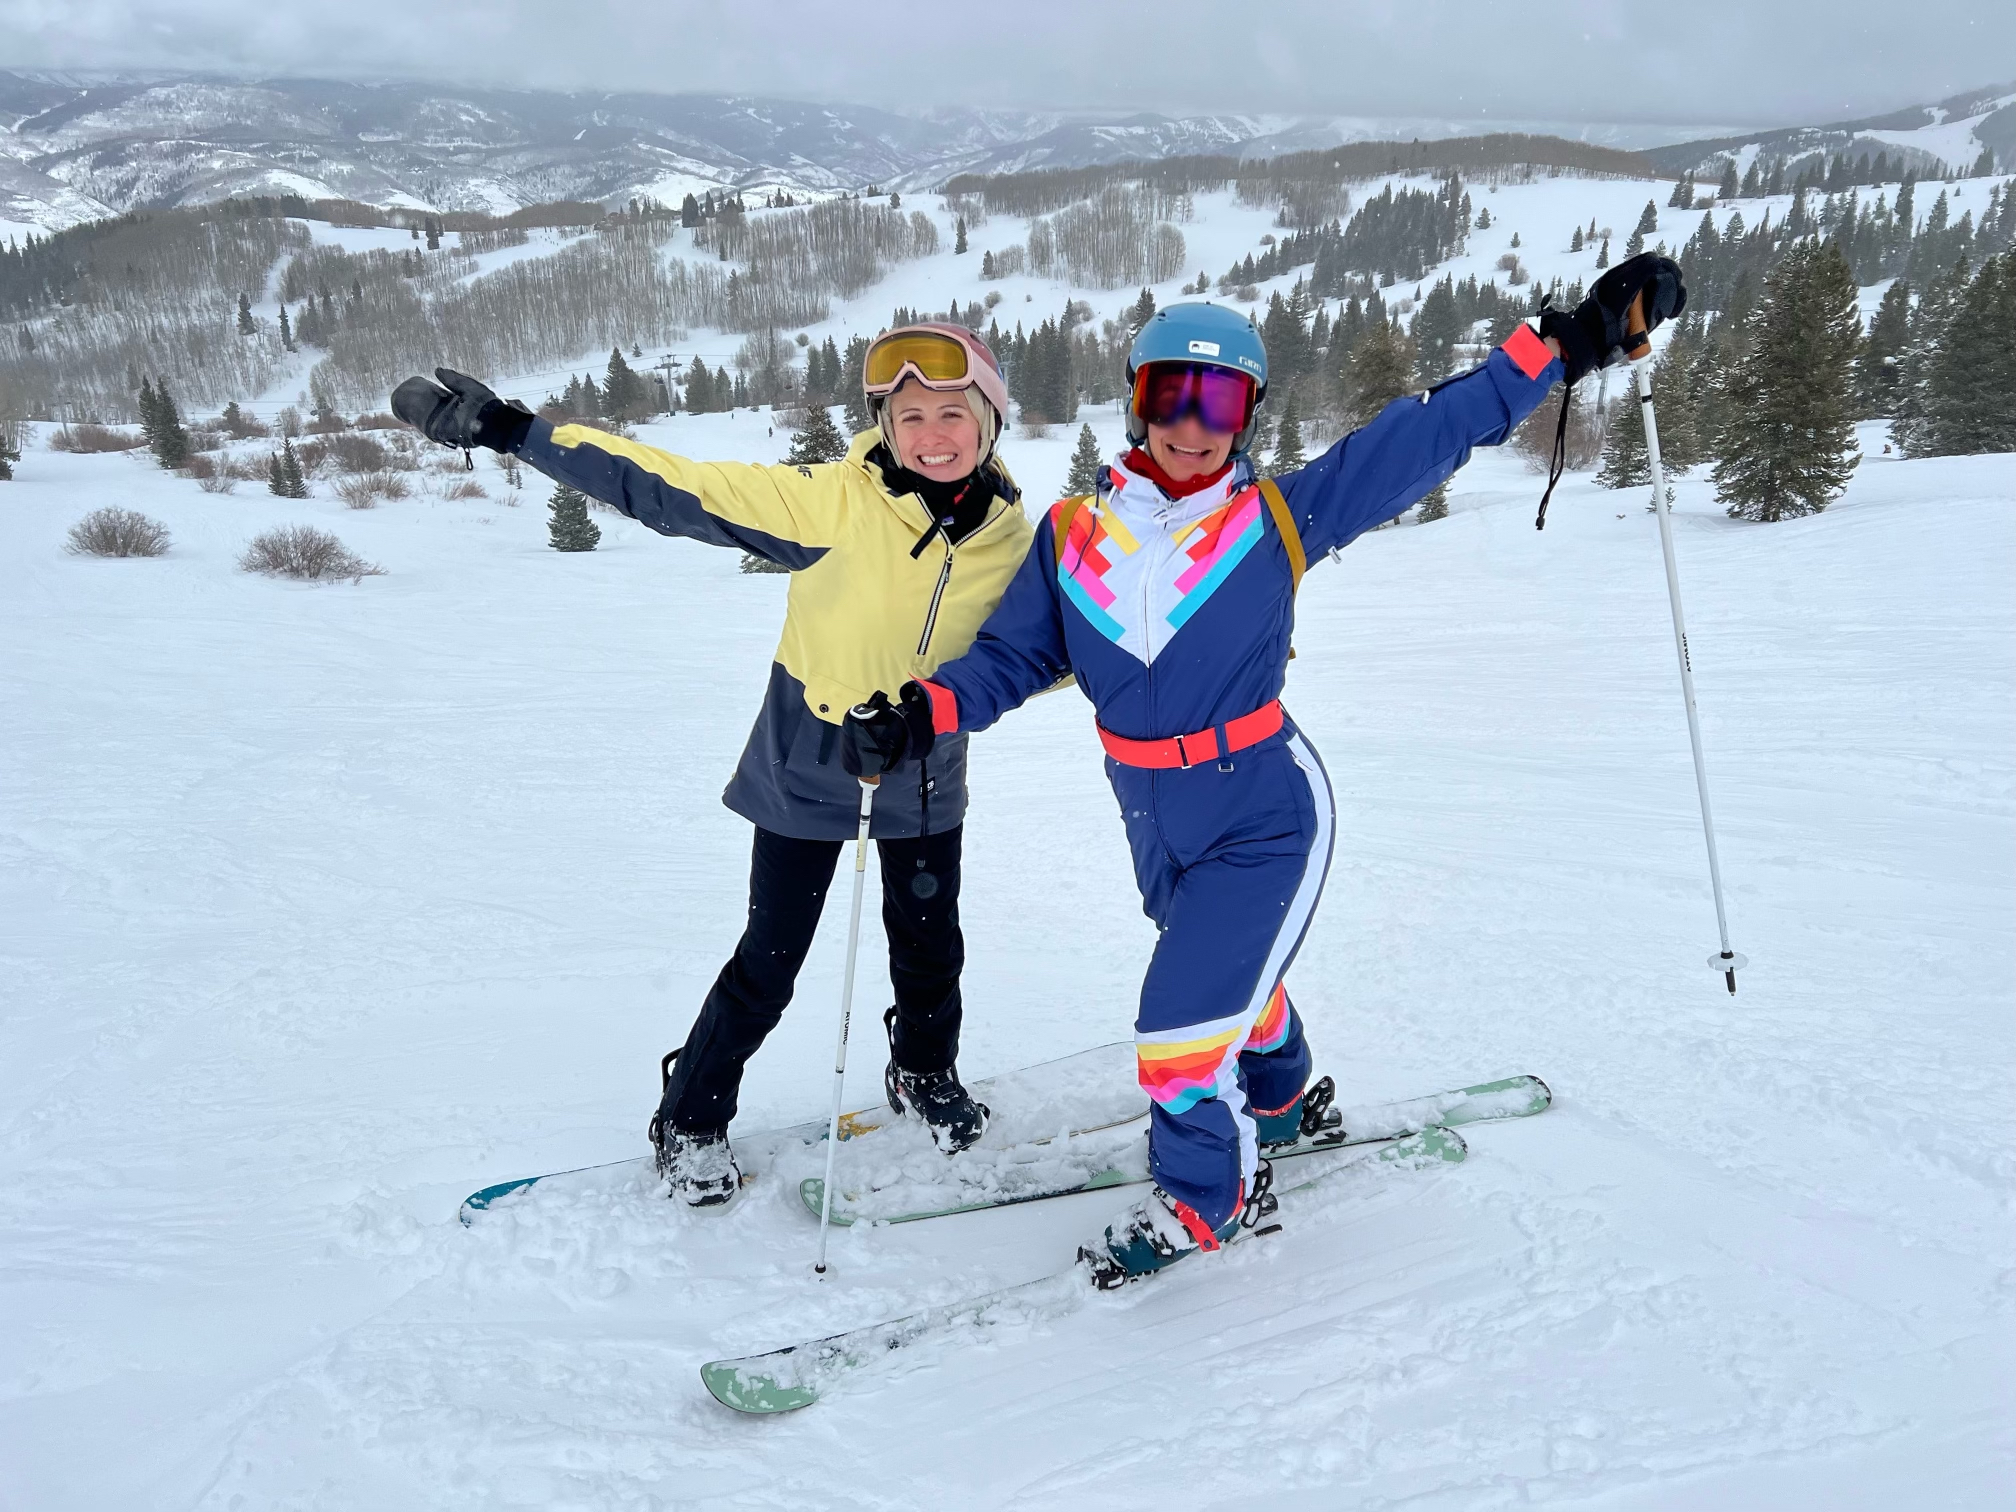 Colorado Mountain Ski Date Experience